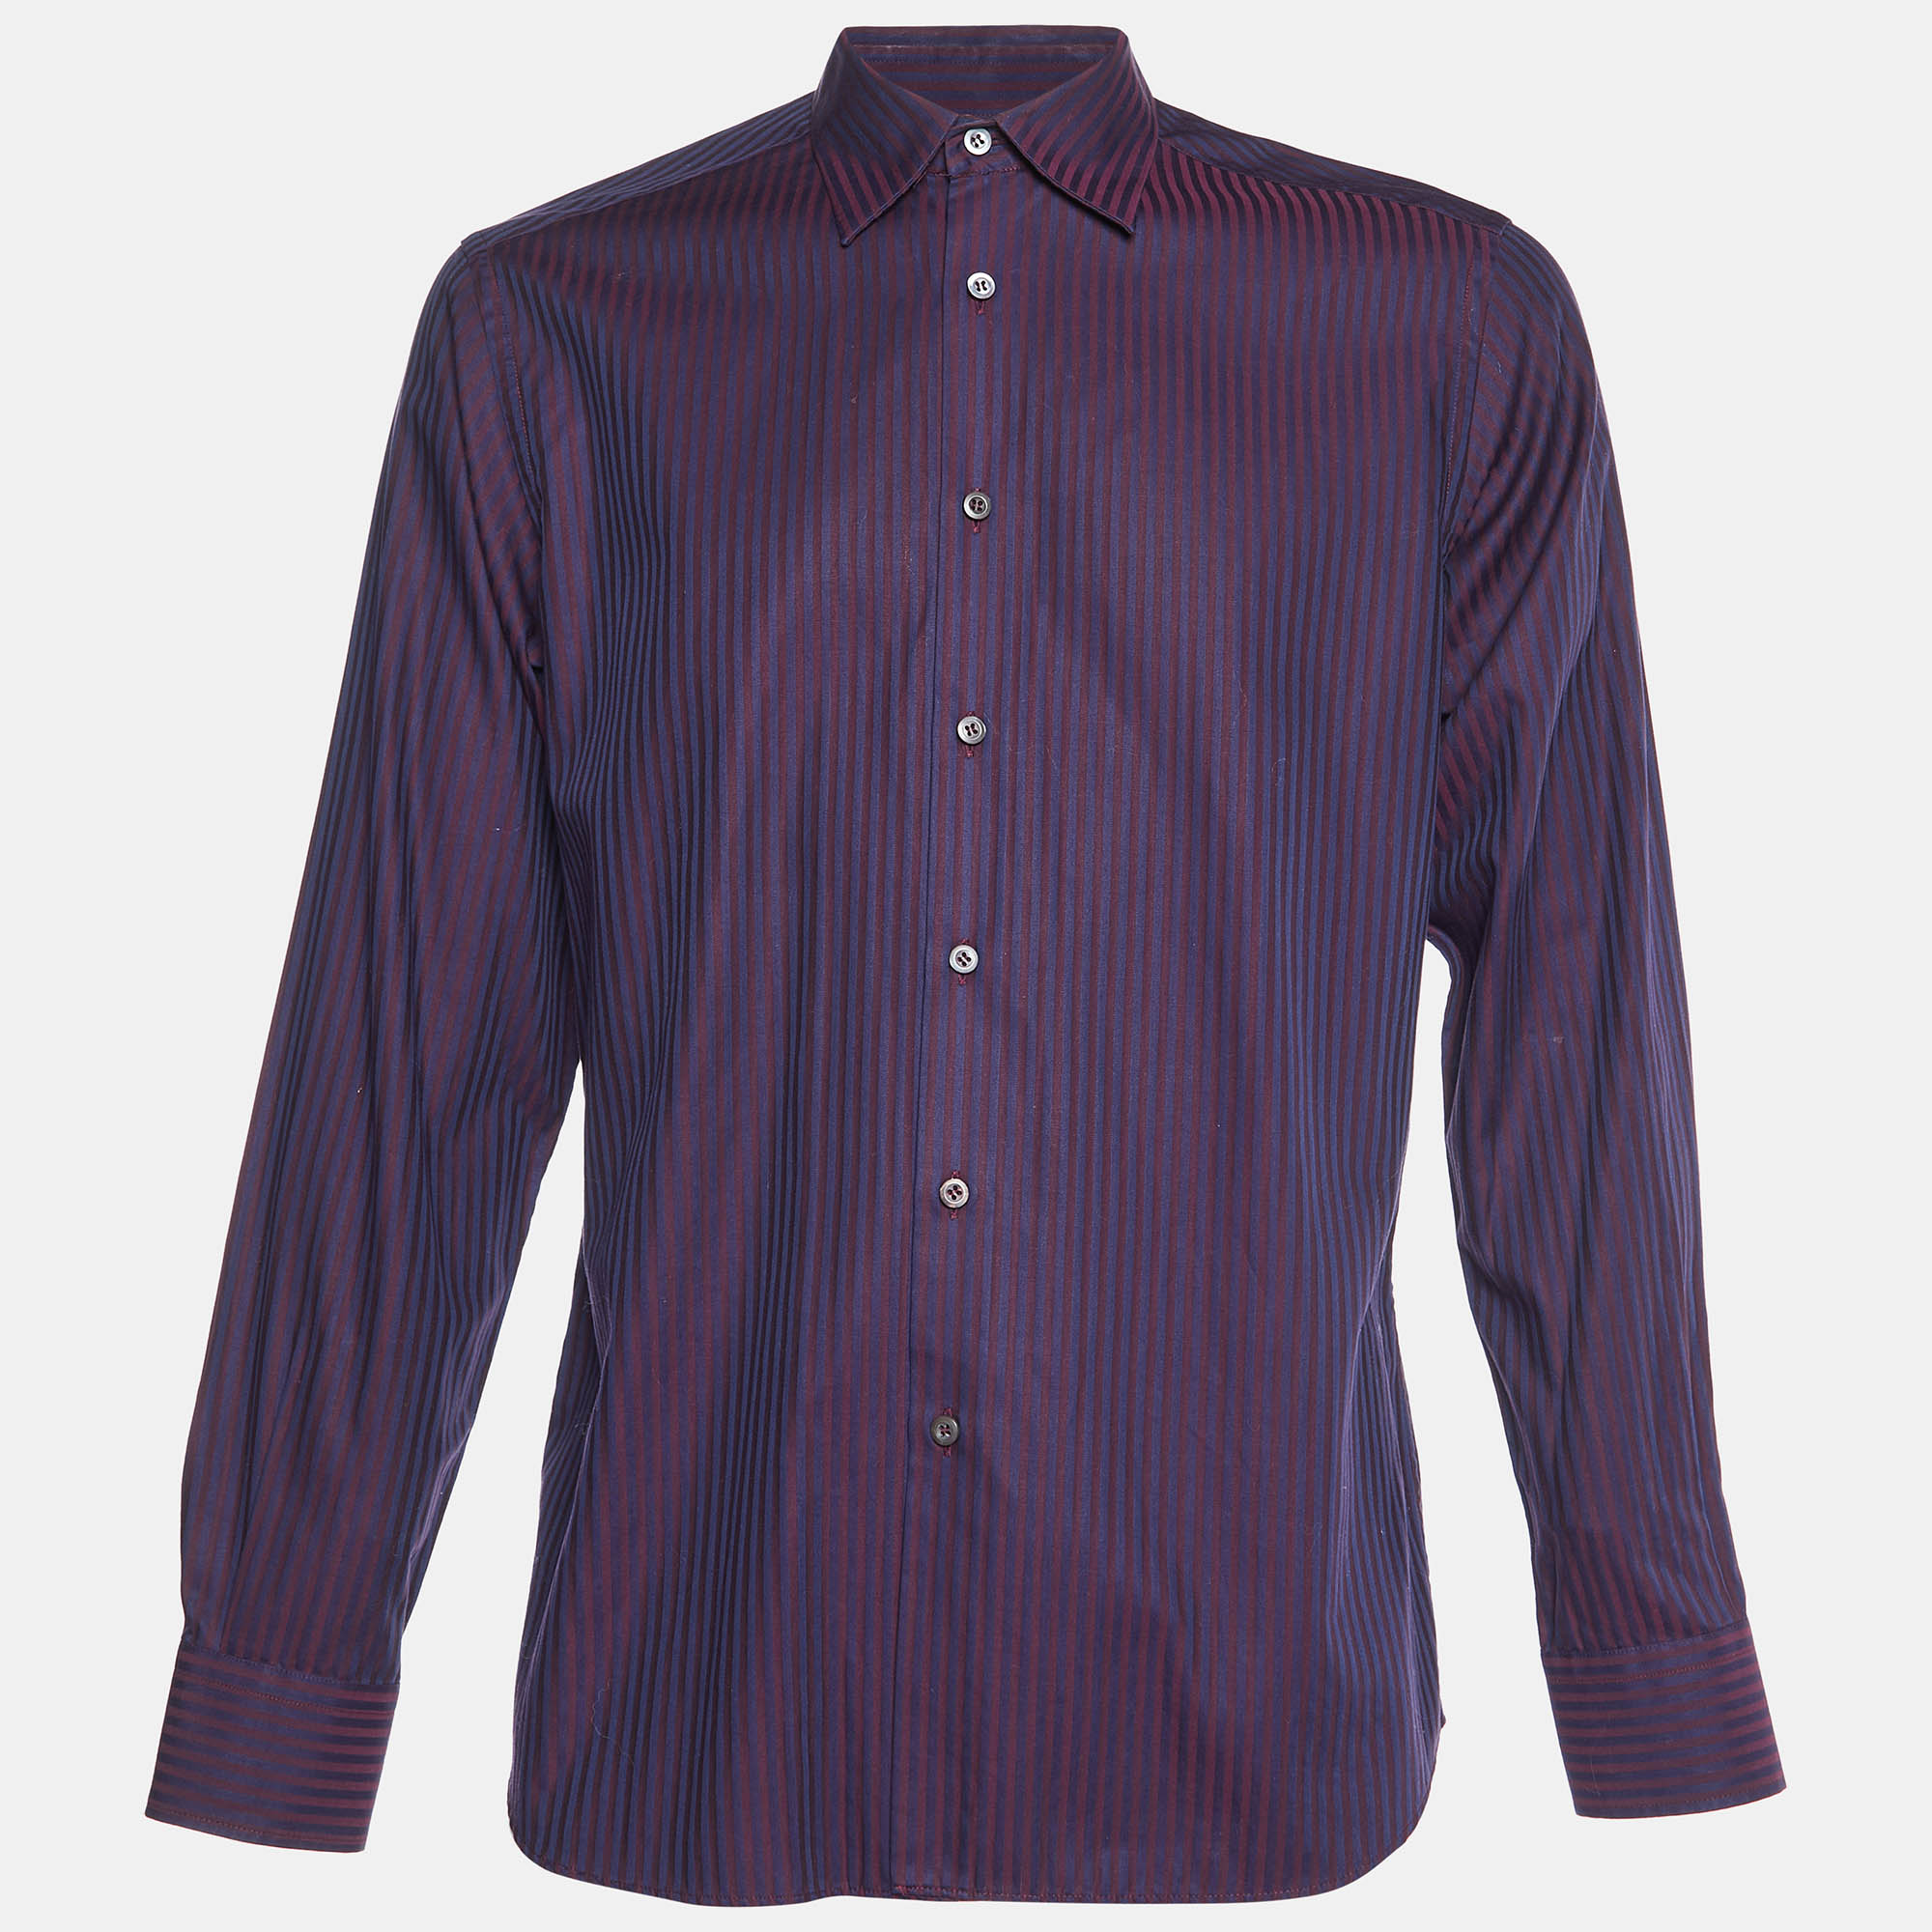 

Prada Bicolor Striped Cotton Long Sleeve Shirt M, Navy blue